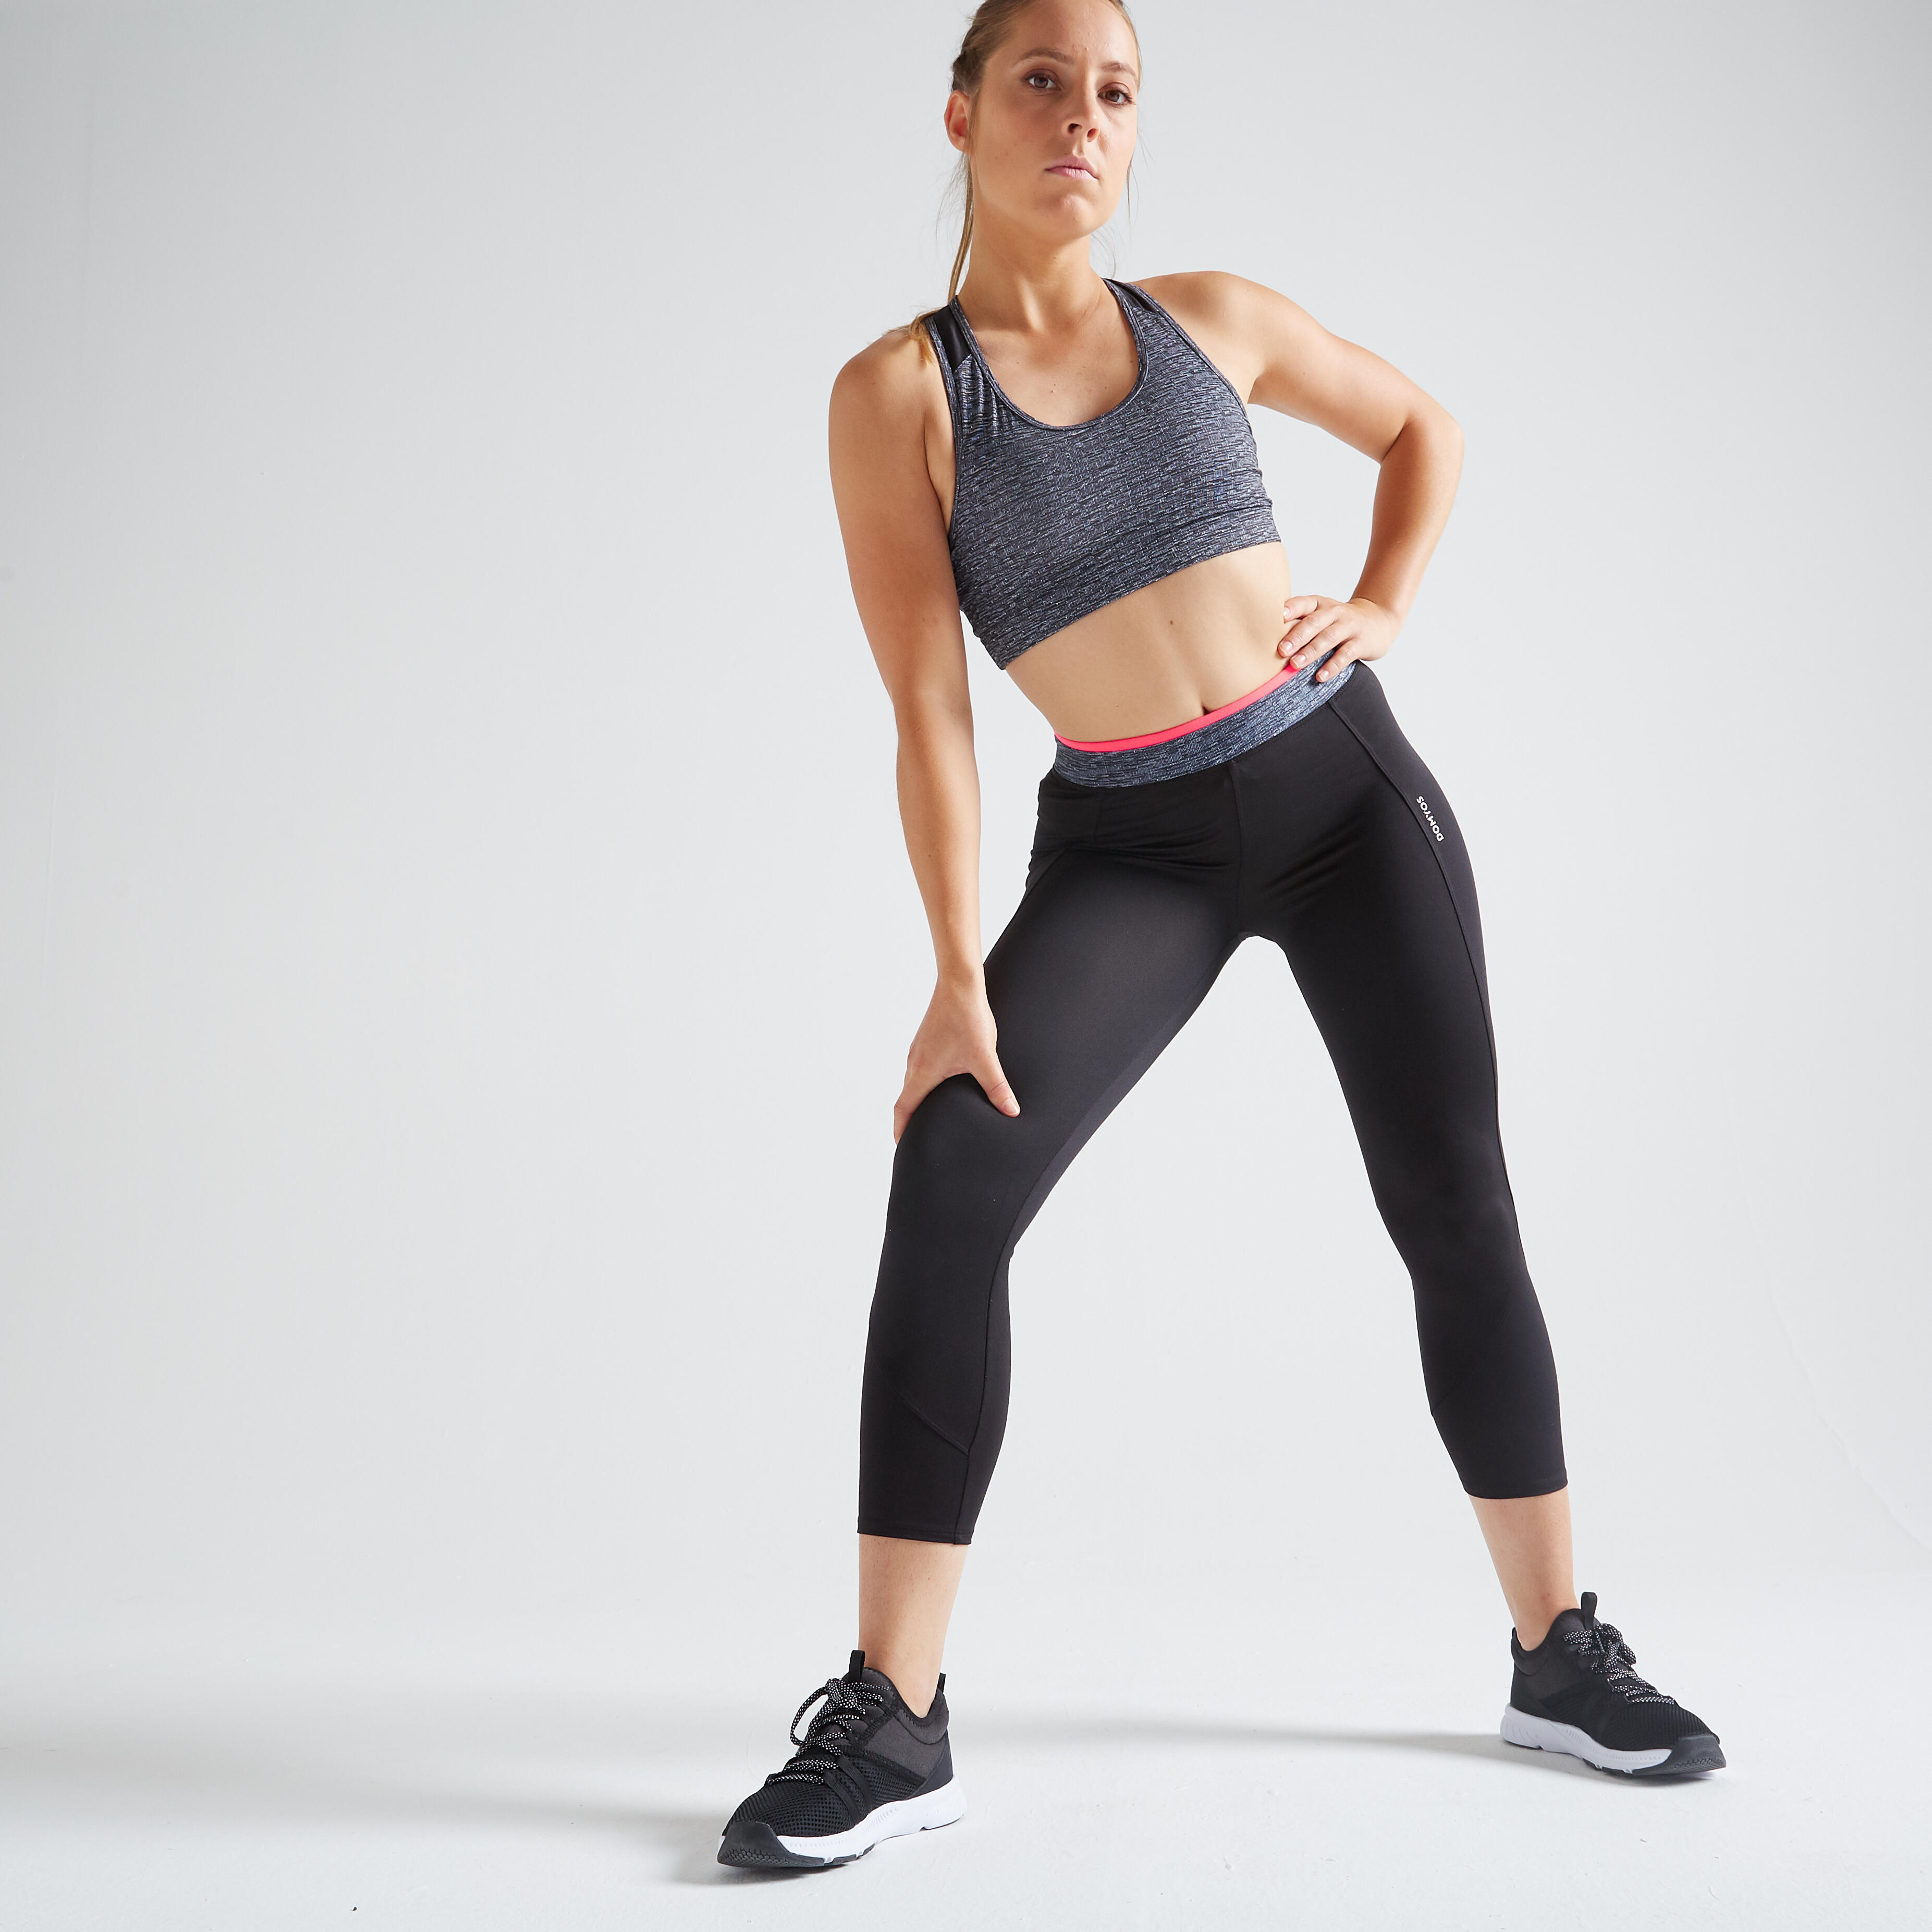 GIMDUMASA Leggings for Women Gym Yoga Pants with Pockets High Waist Workout  Running Sports Activewear Fitness UK